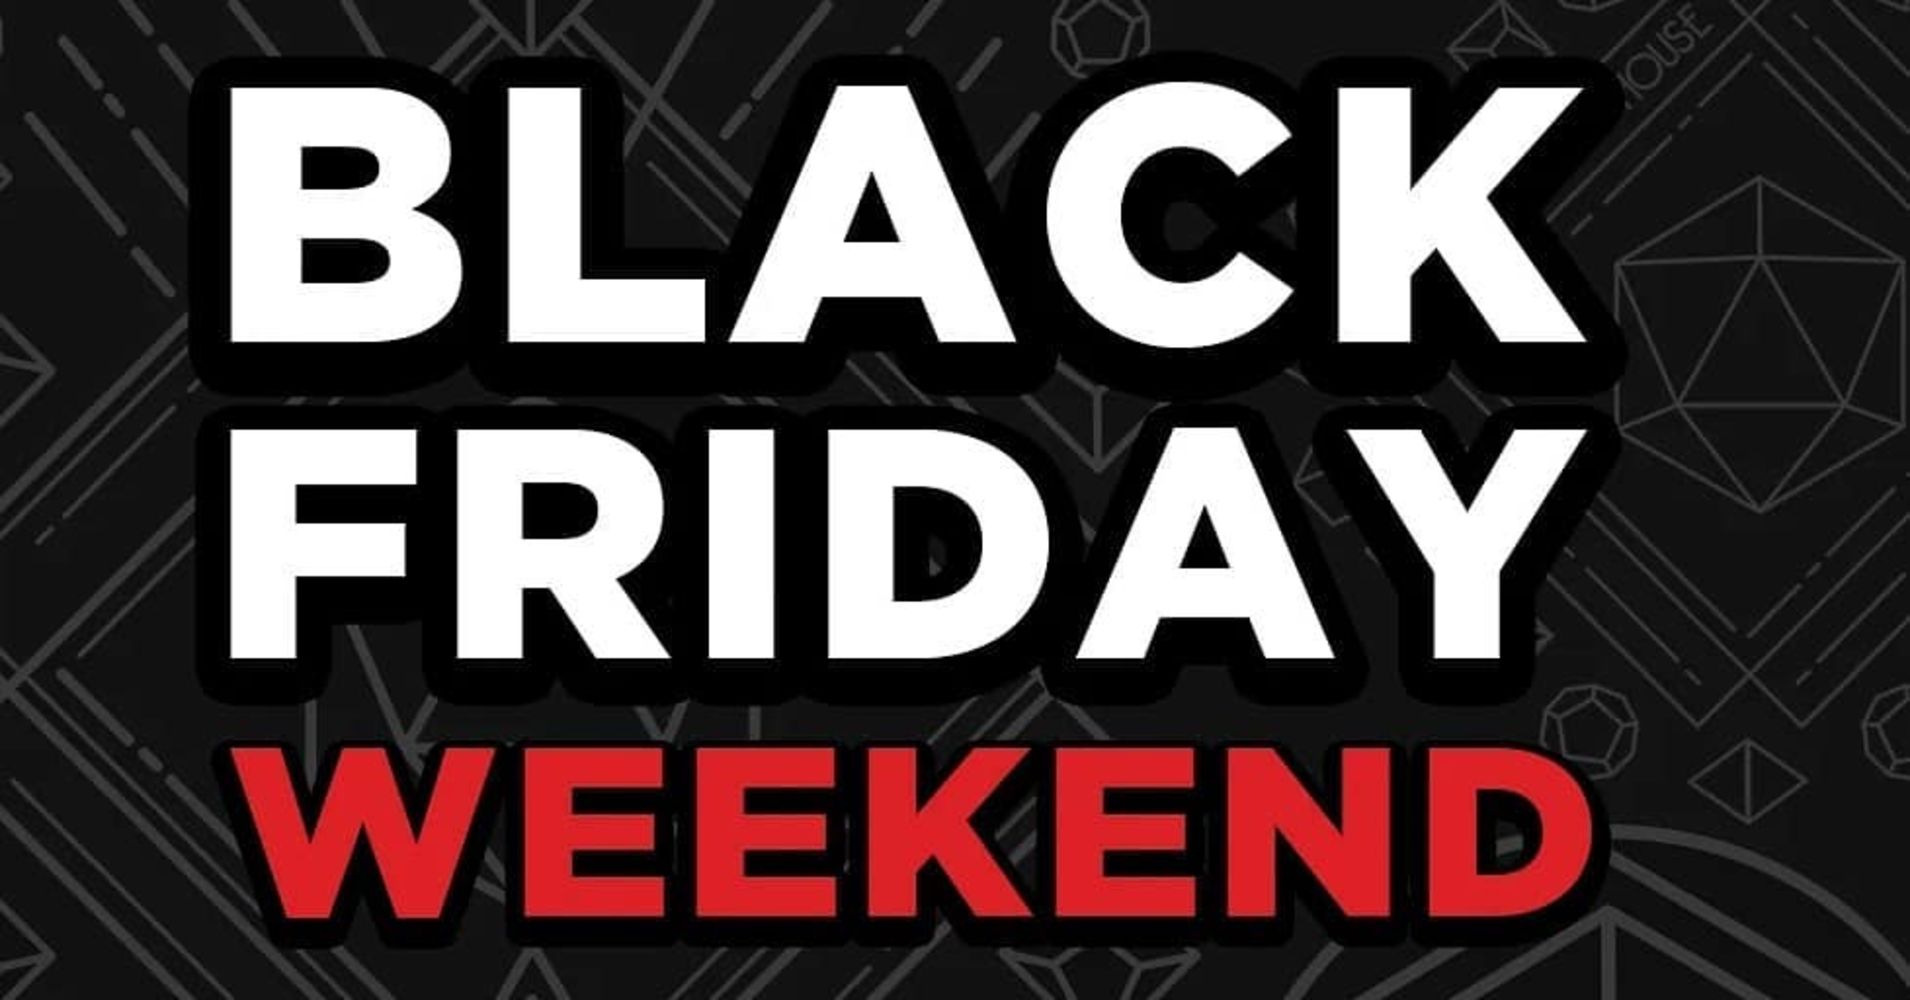 \\Saturday Deals 16:00  || Black Friday Weekend ||Sony, Einhell, Fossil, Bosch, Tfa, Jbl, Hp, Hella, Pulsar||Watch, Toner, Lamp, Mouse, Fryer||